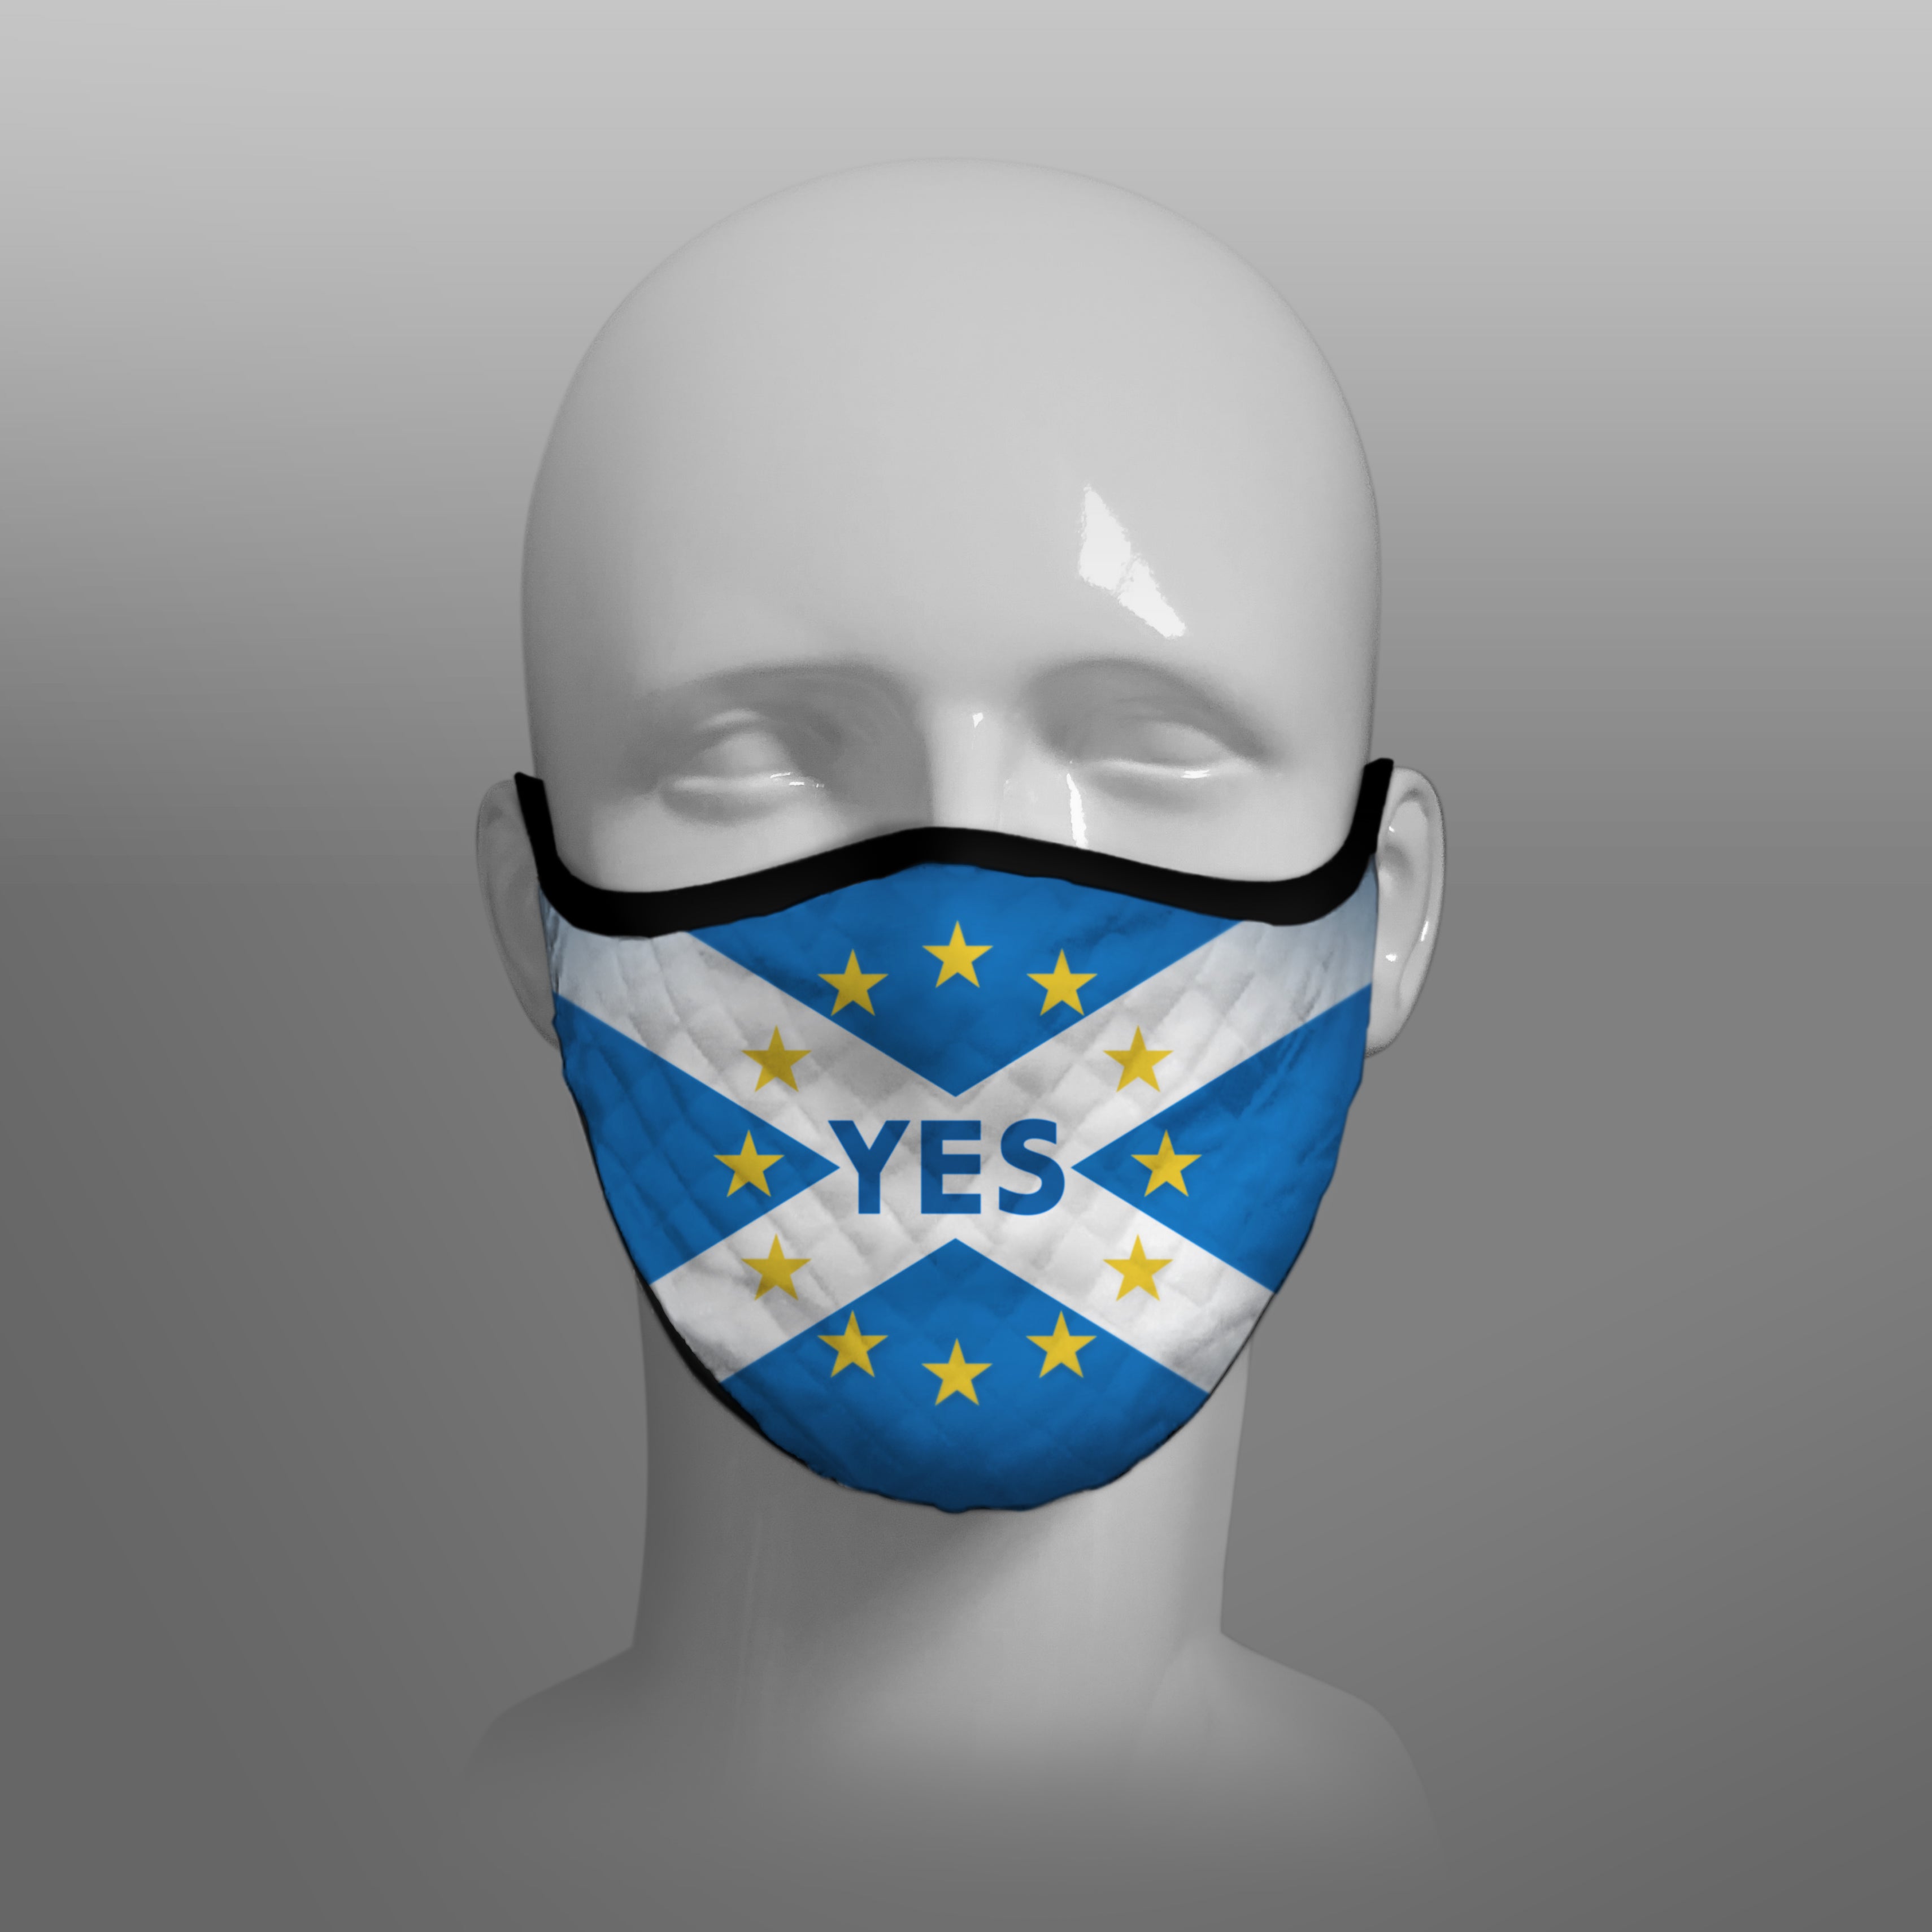 The Scottish Scotland Saltire YES IT'S TIME - Alba Gu Brath - Pro EU - European Union - Nicola Sturgeon - Face Mask - face covering small - by Steven Patrick Sim the Tartan Artisan - Stevie Tartan Guy